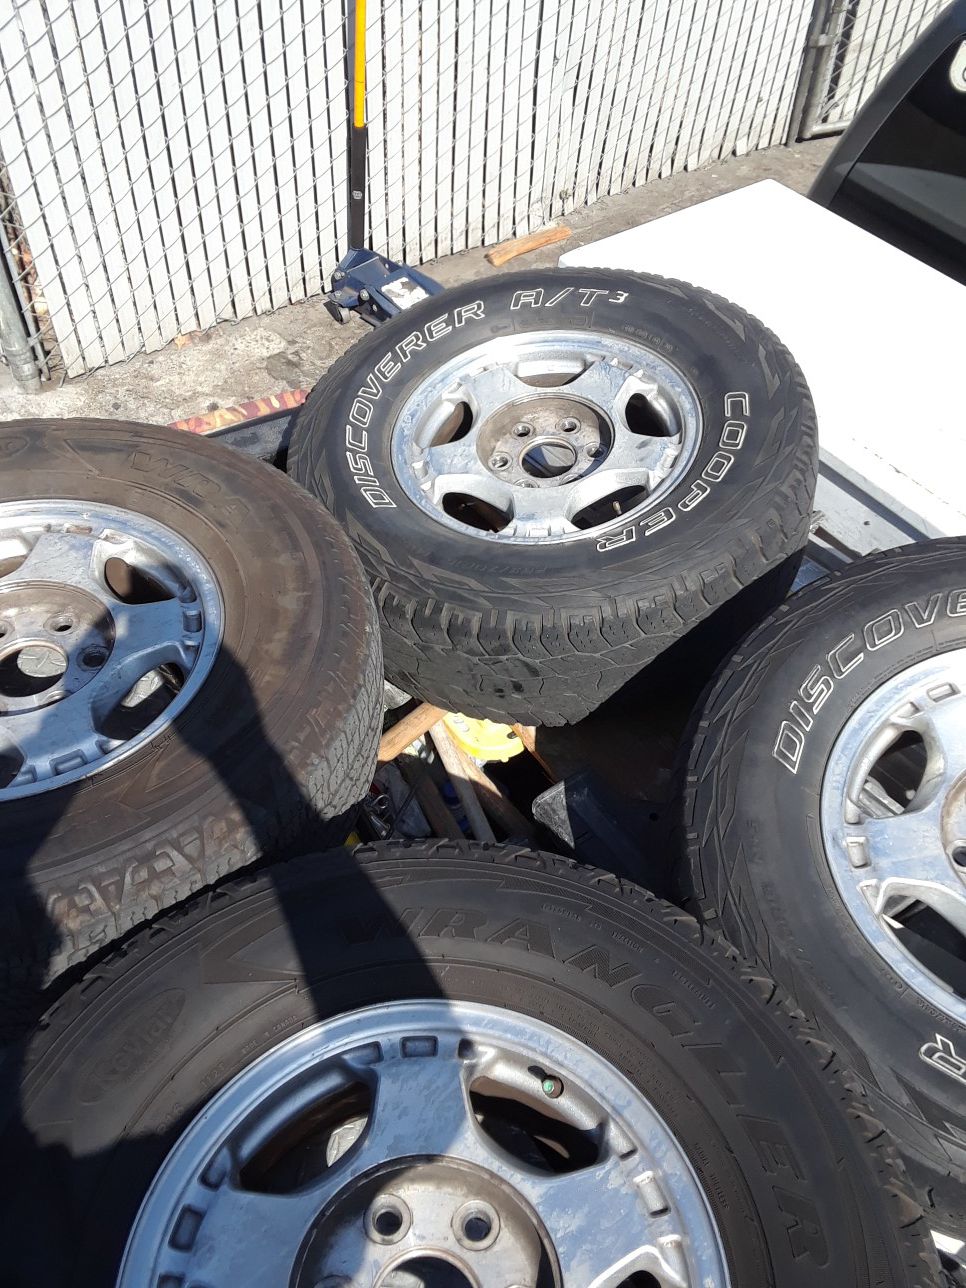 2000 Chevy Silverado tires and rims with caps